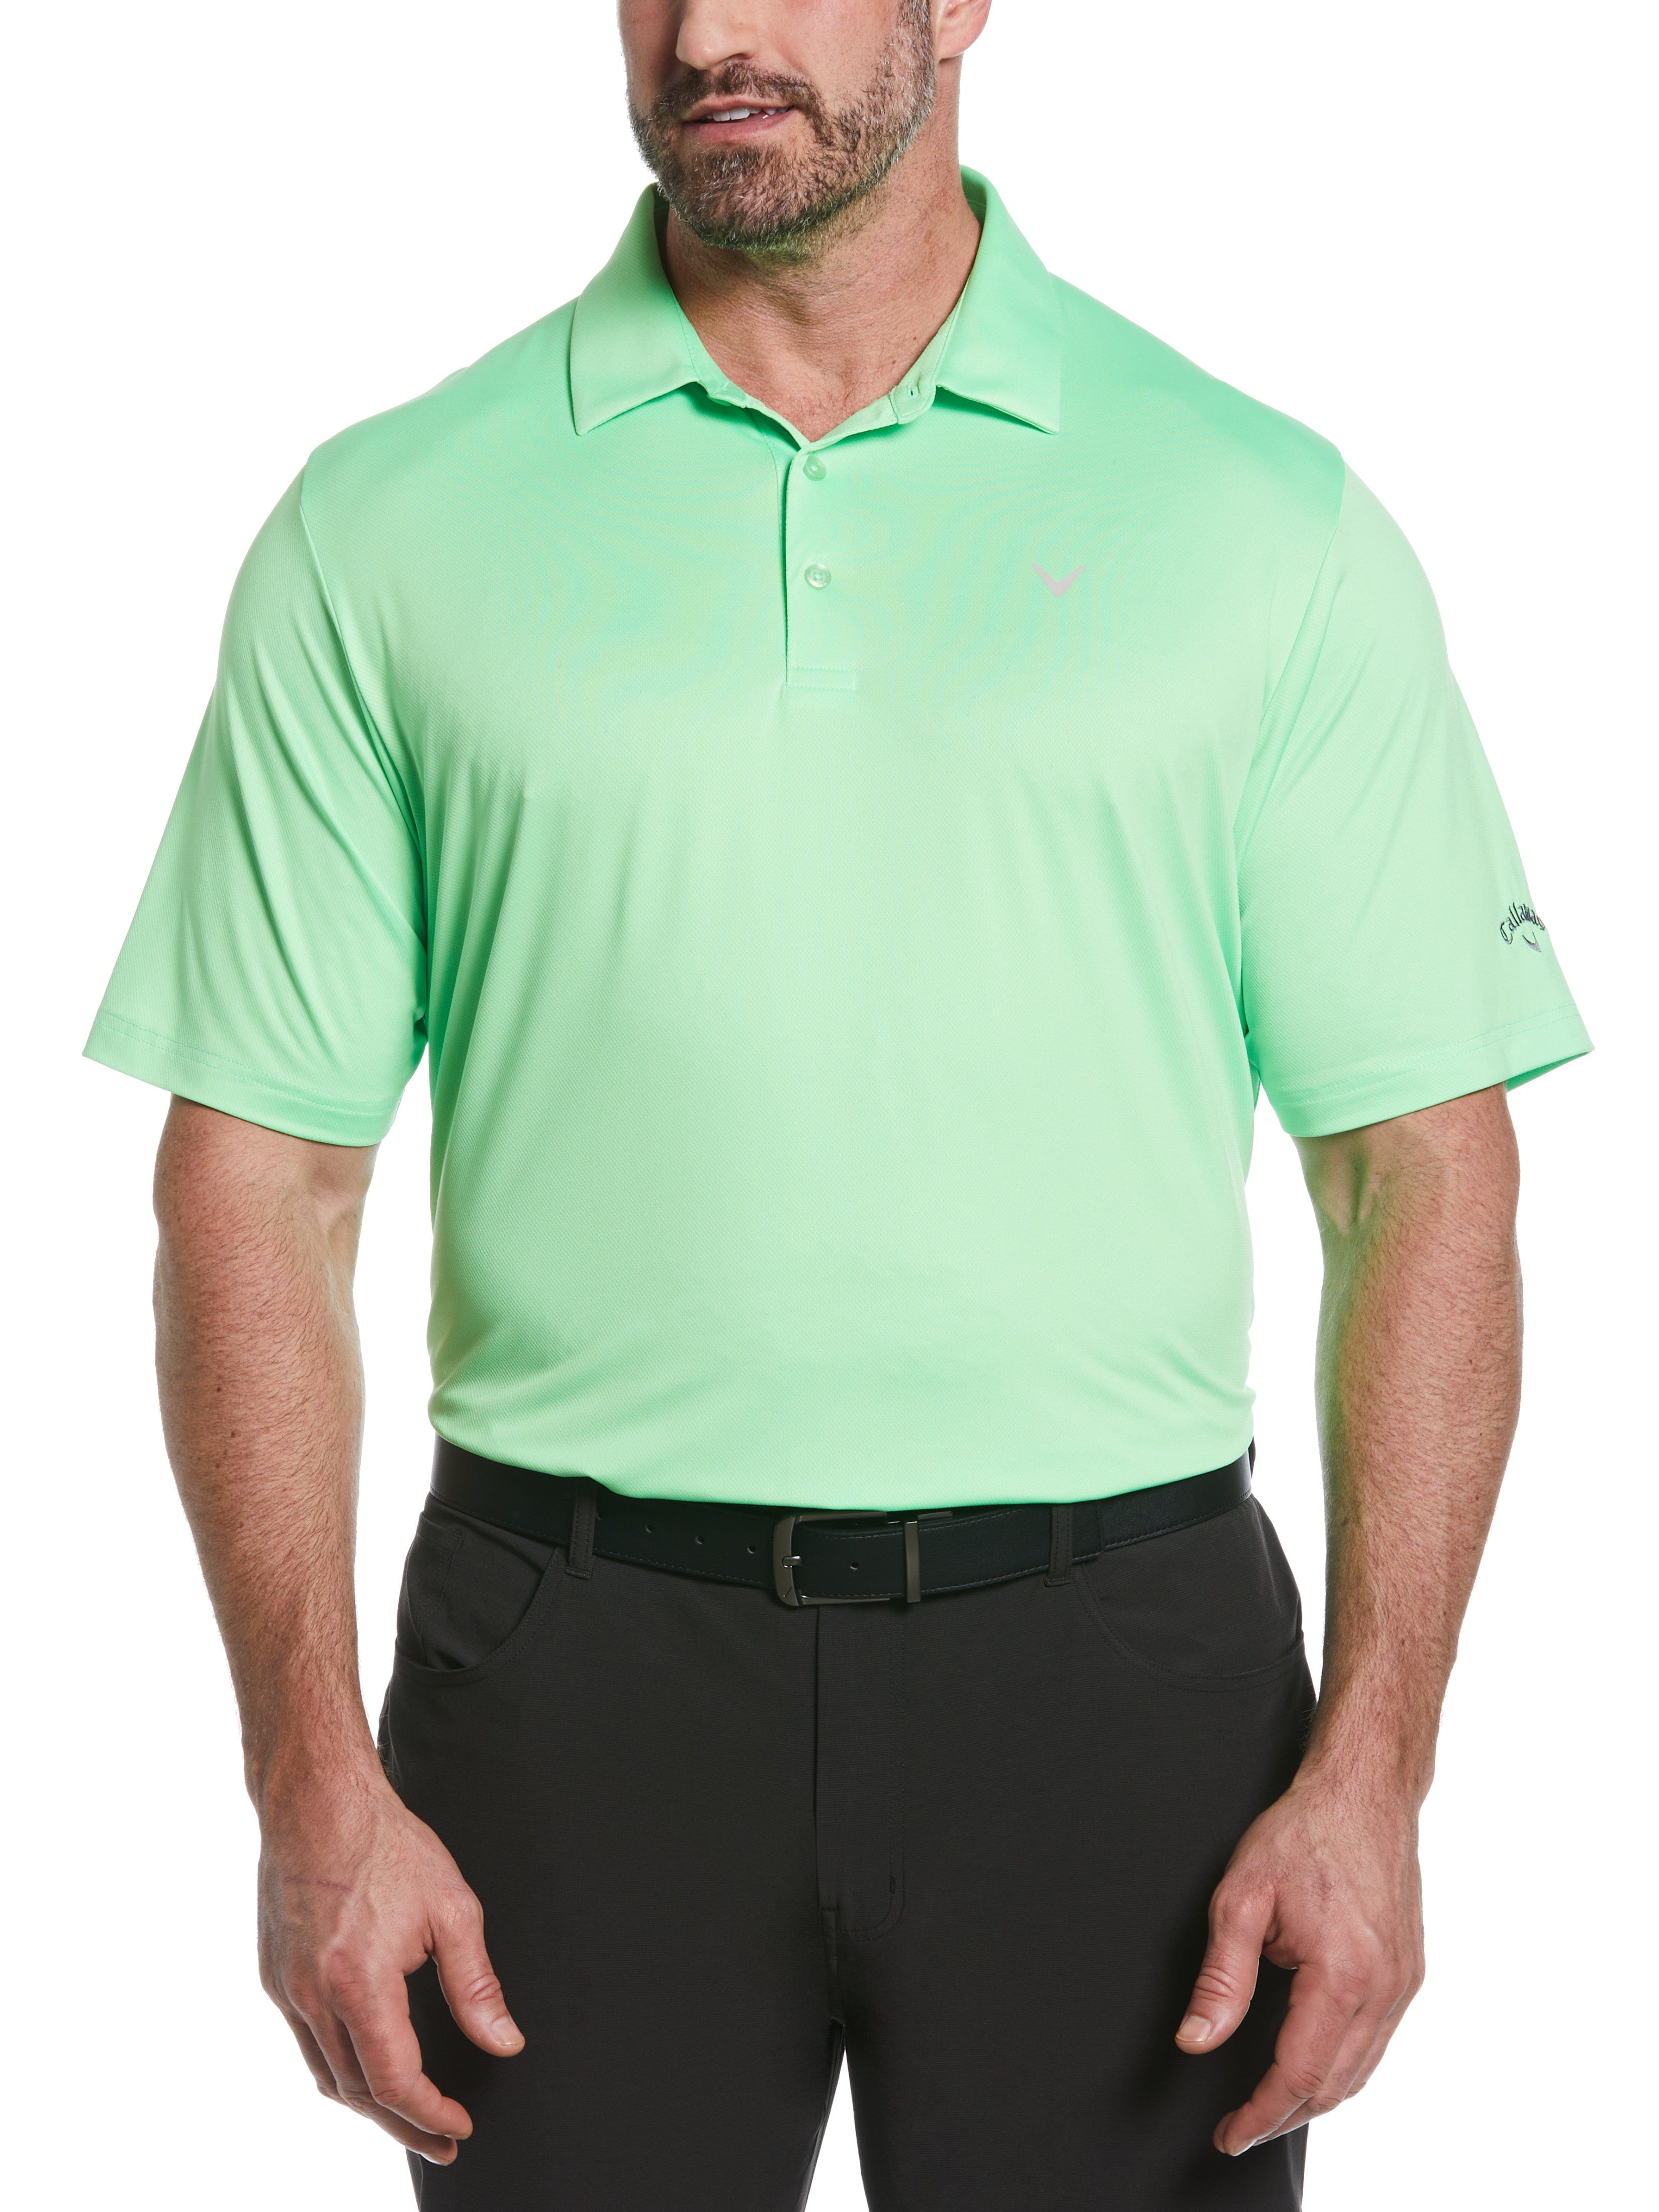 Callaway Apparel Mens Big & Tall Solid Swing Tech Golf Polo Shirt, Size 5X, Summer Green, Polyester/Elastane | Golf Apparel Shop